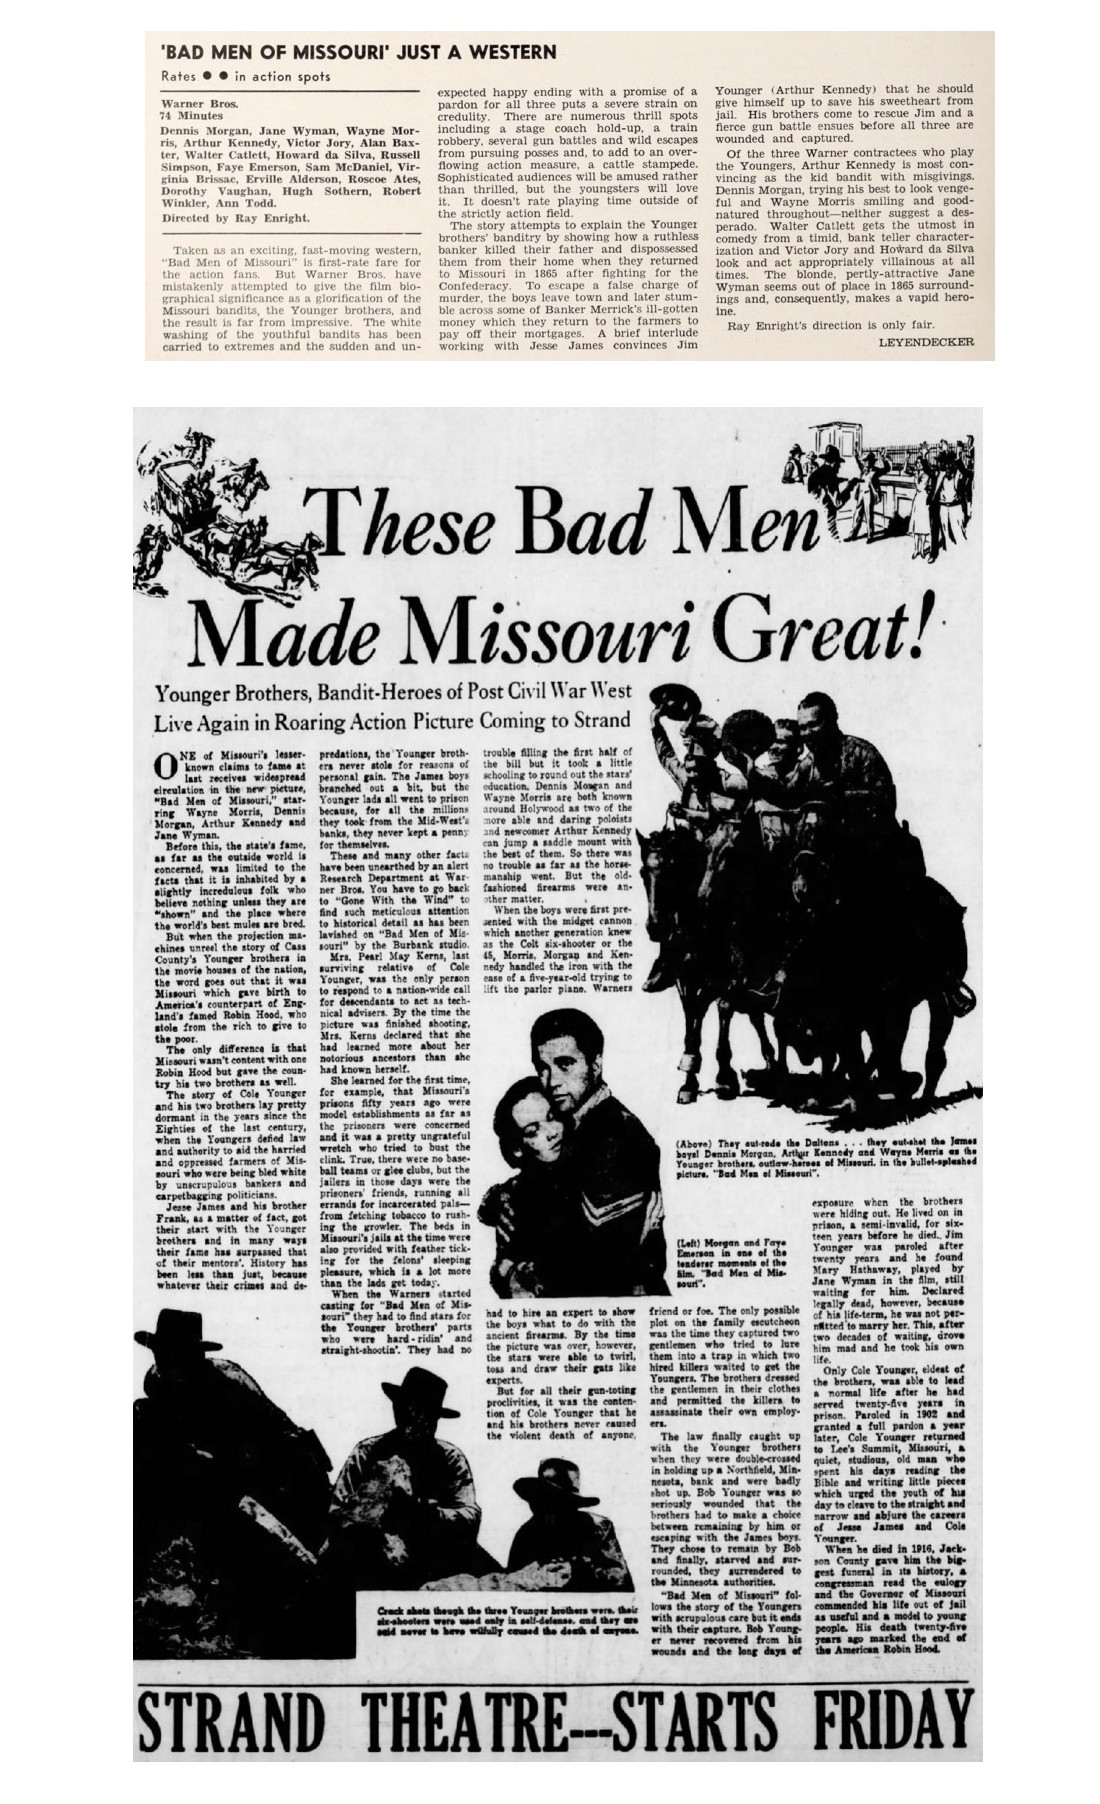 Bad Men of Missouri film reviews